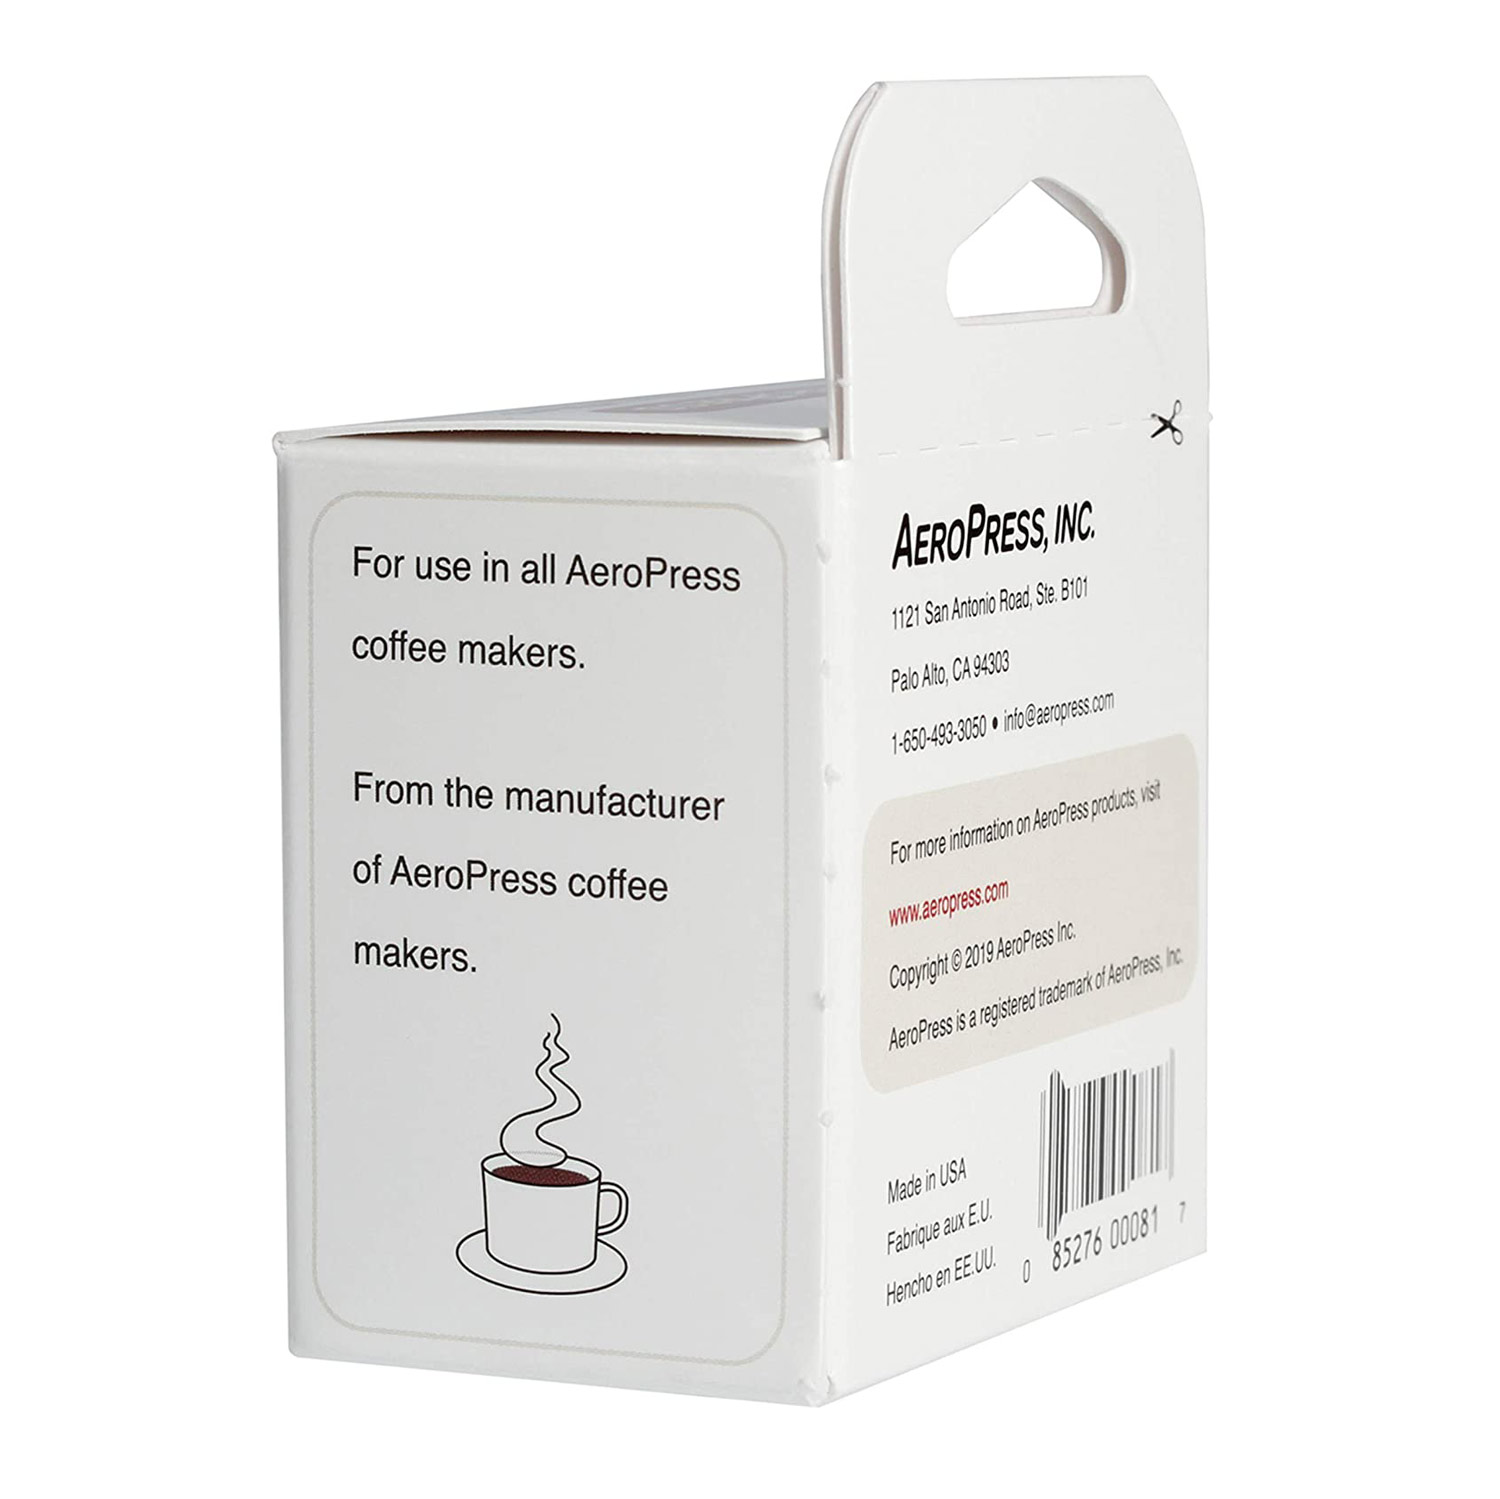 Aeropress Filters - 350 Pack